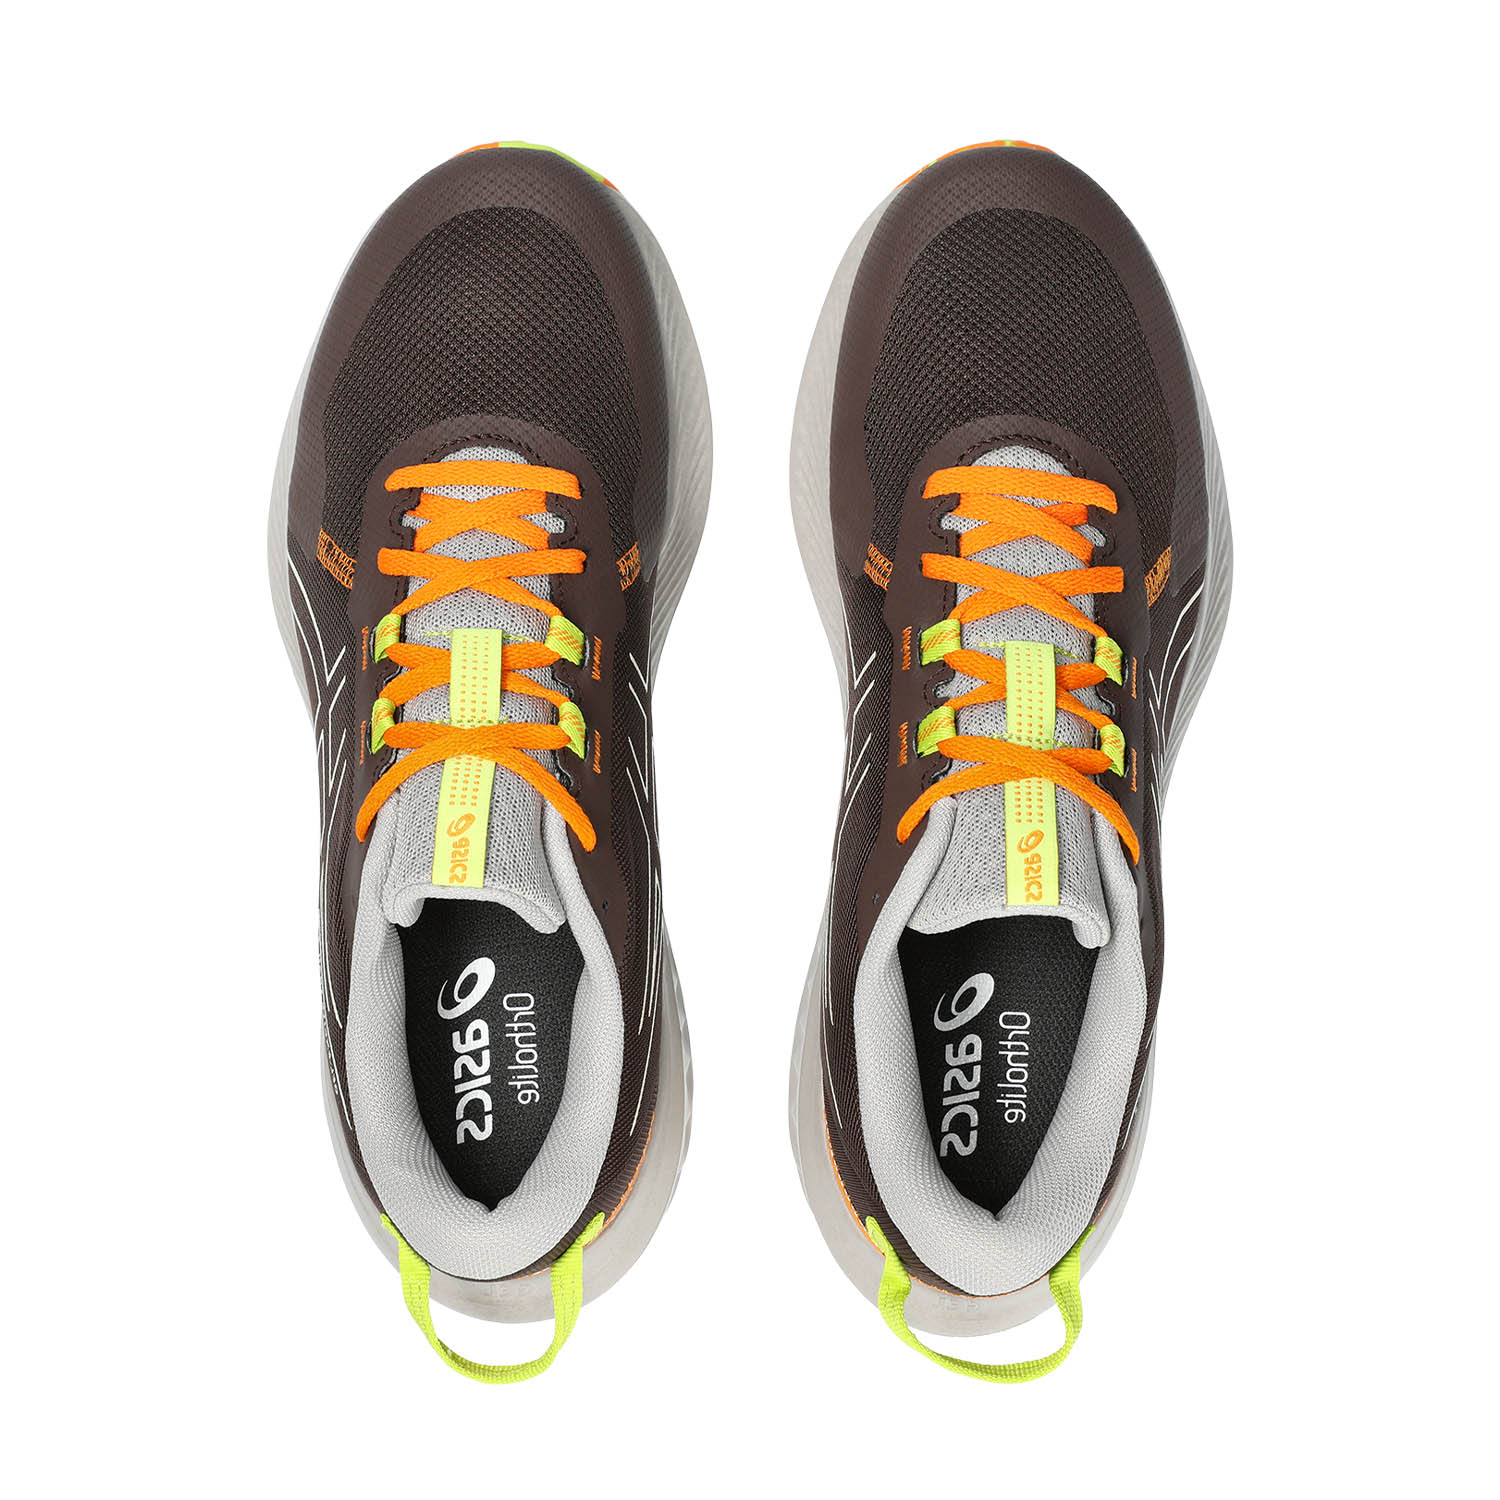 Asics Gel Excite Trail 2 Men's Trail Running Shoes - Dark Auburn